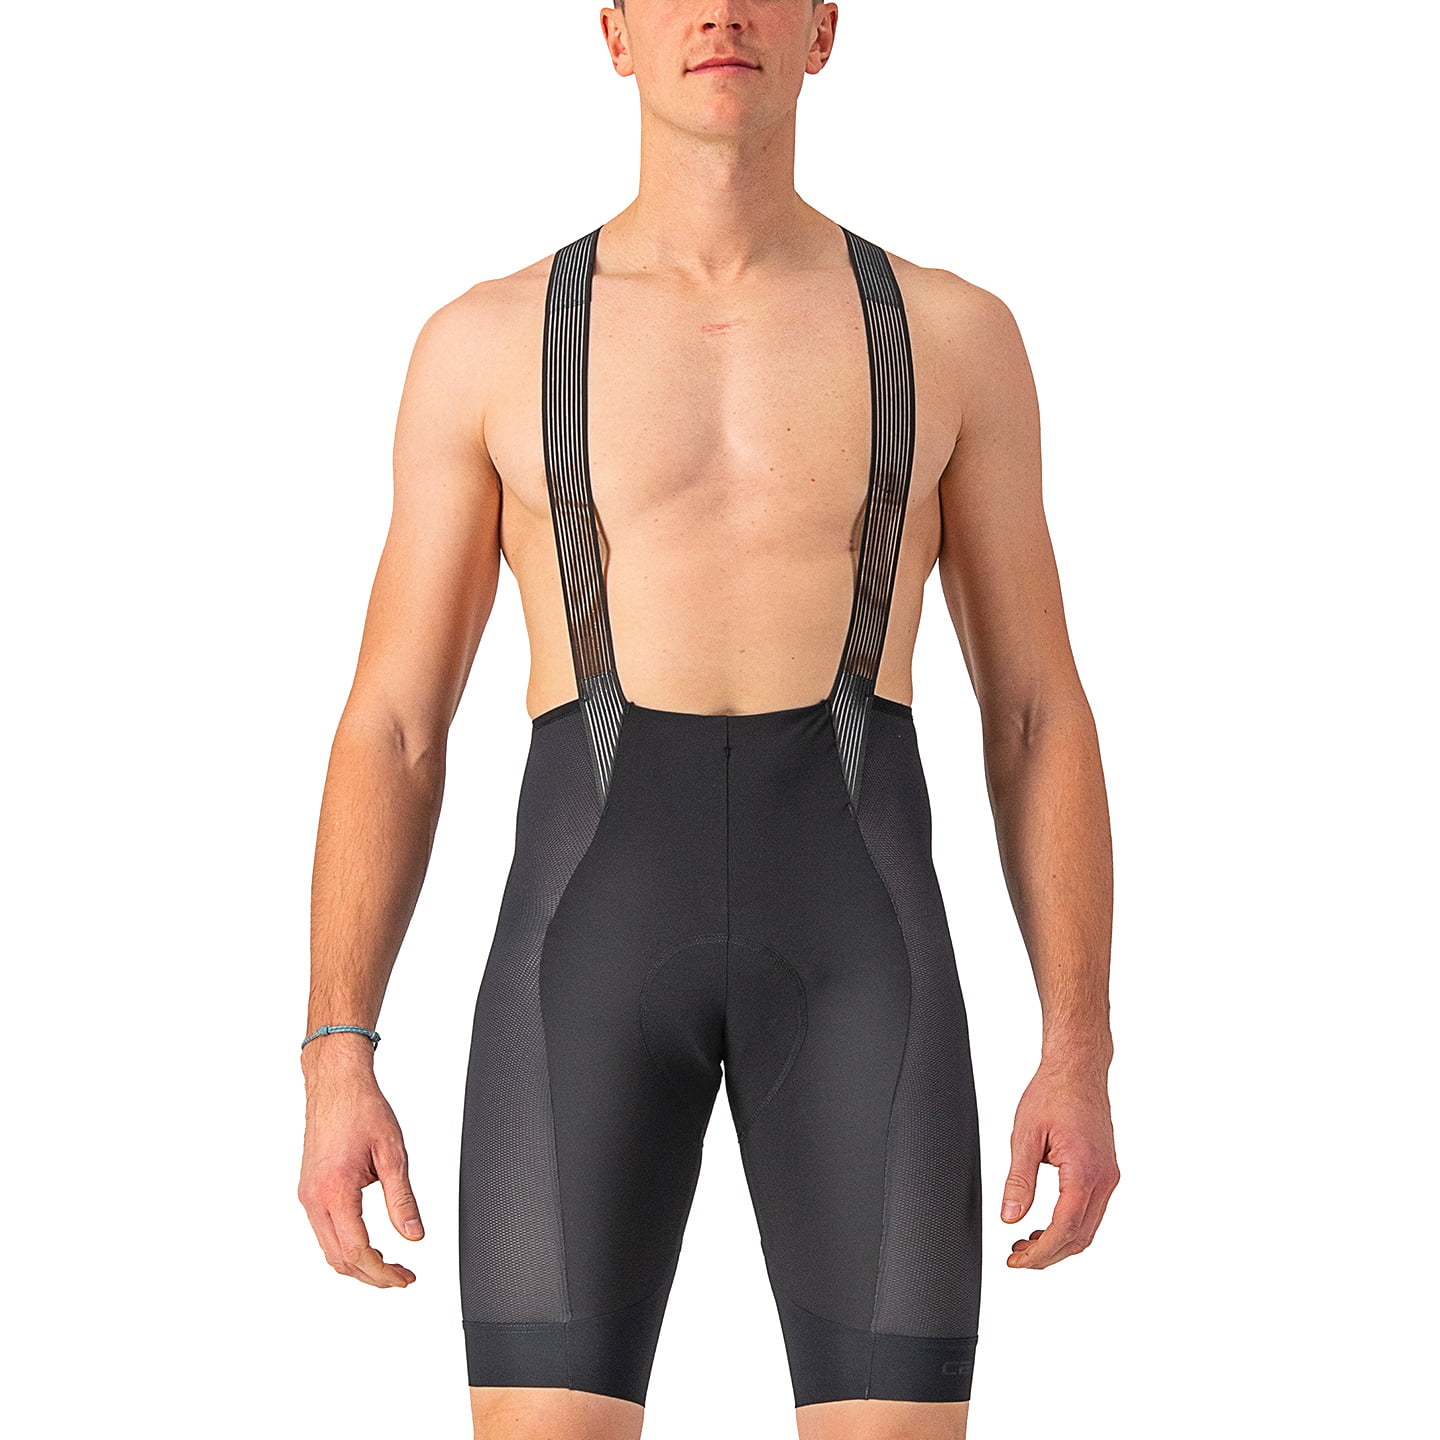 CASTELLI Insider 2 Bib Shorts Bib Shorts, for men, size M, Cycle shorts, Cycling clothing